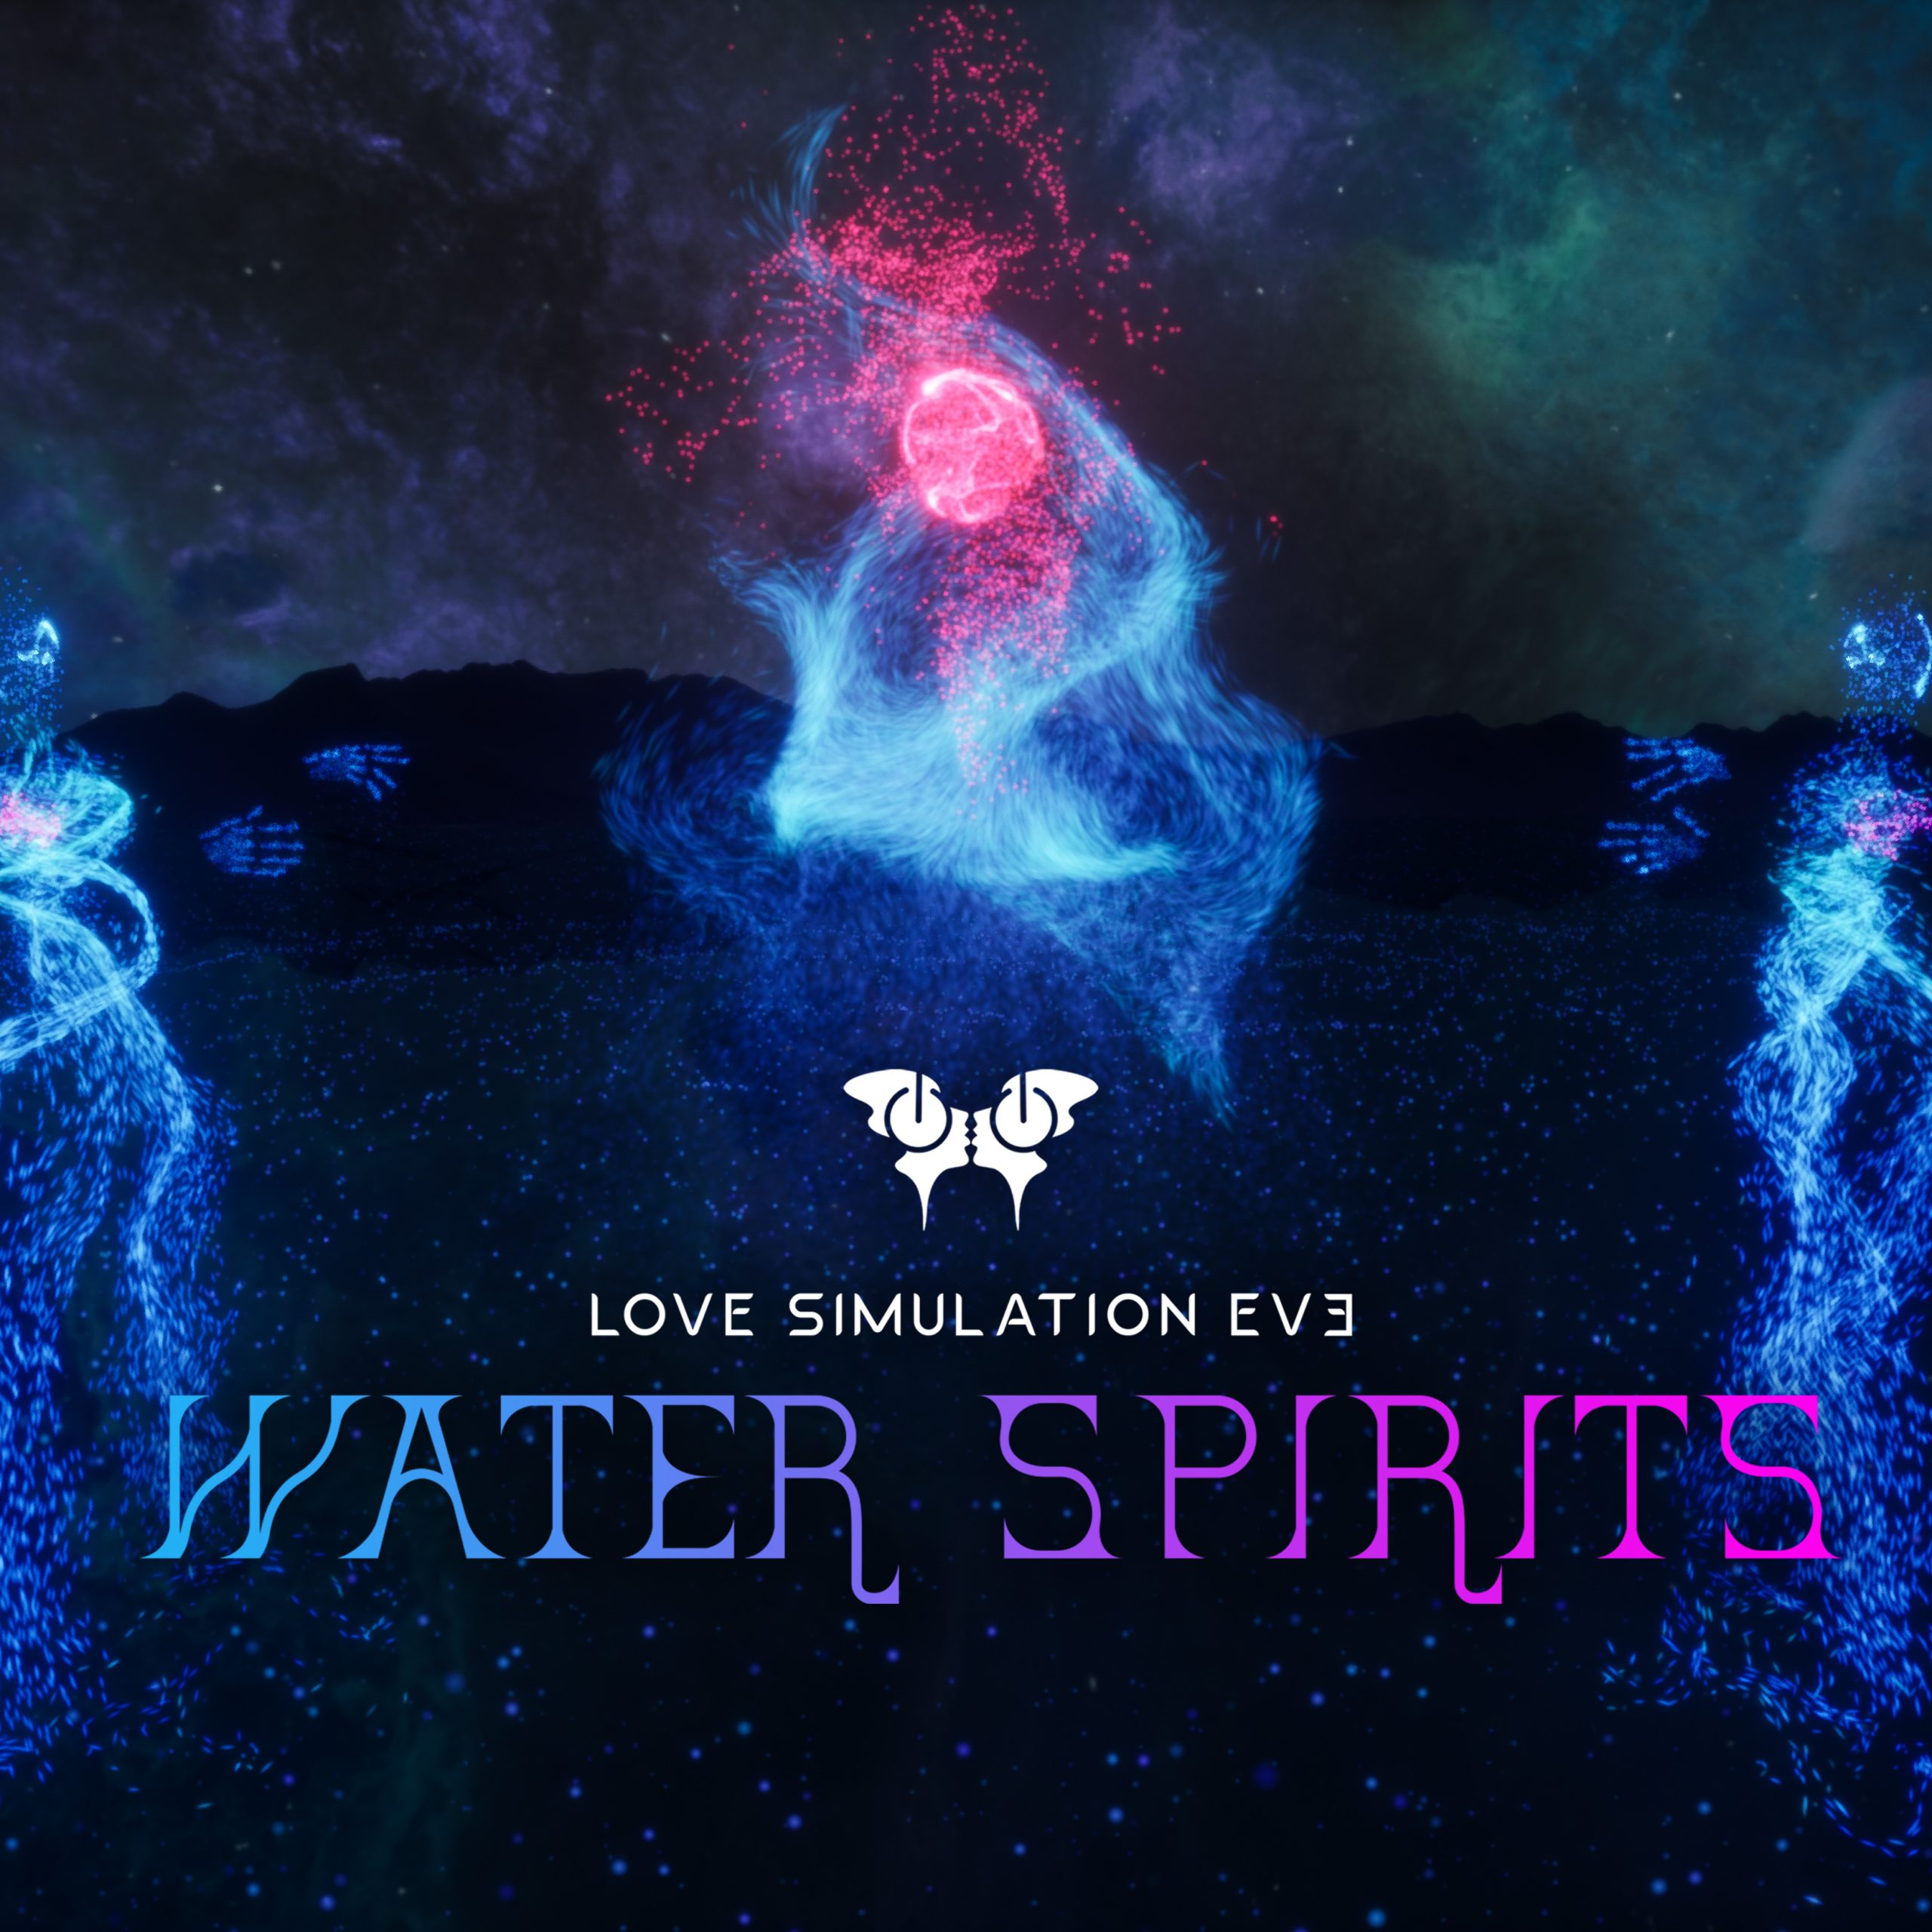 Avatar's Journey: Water Spirits